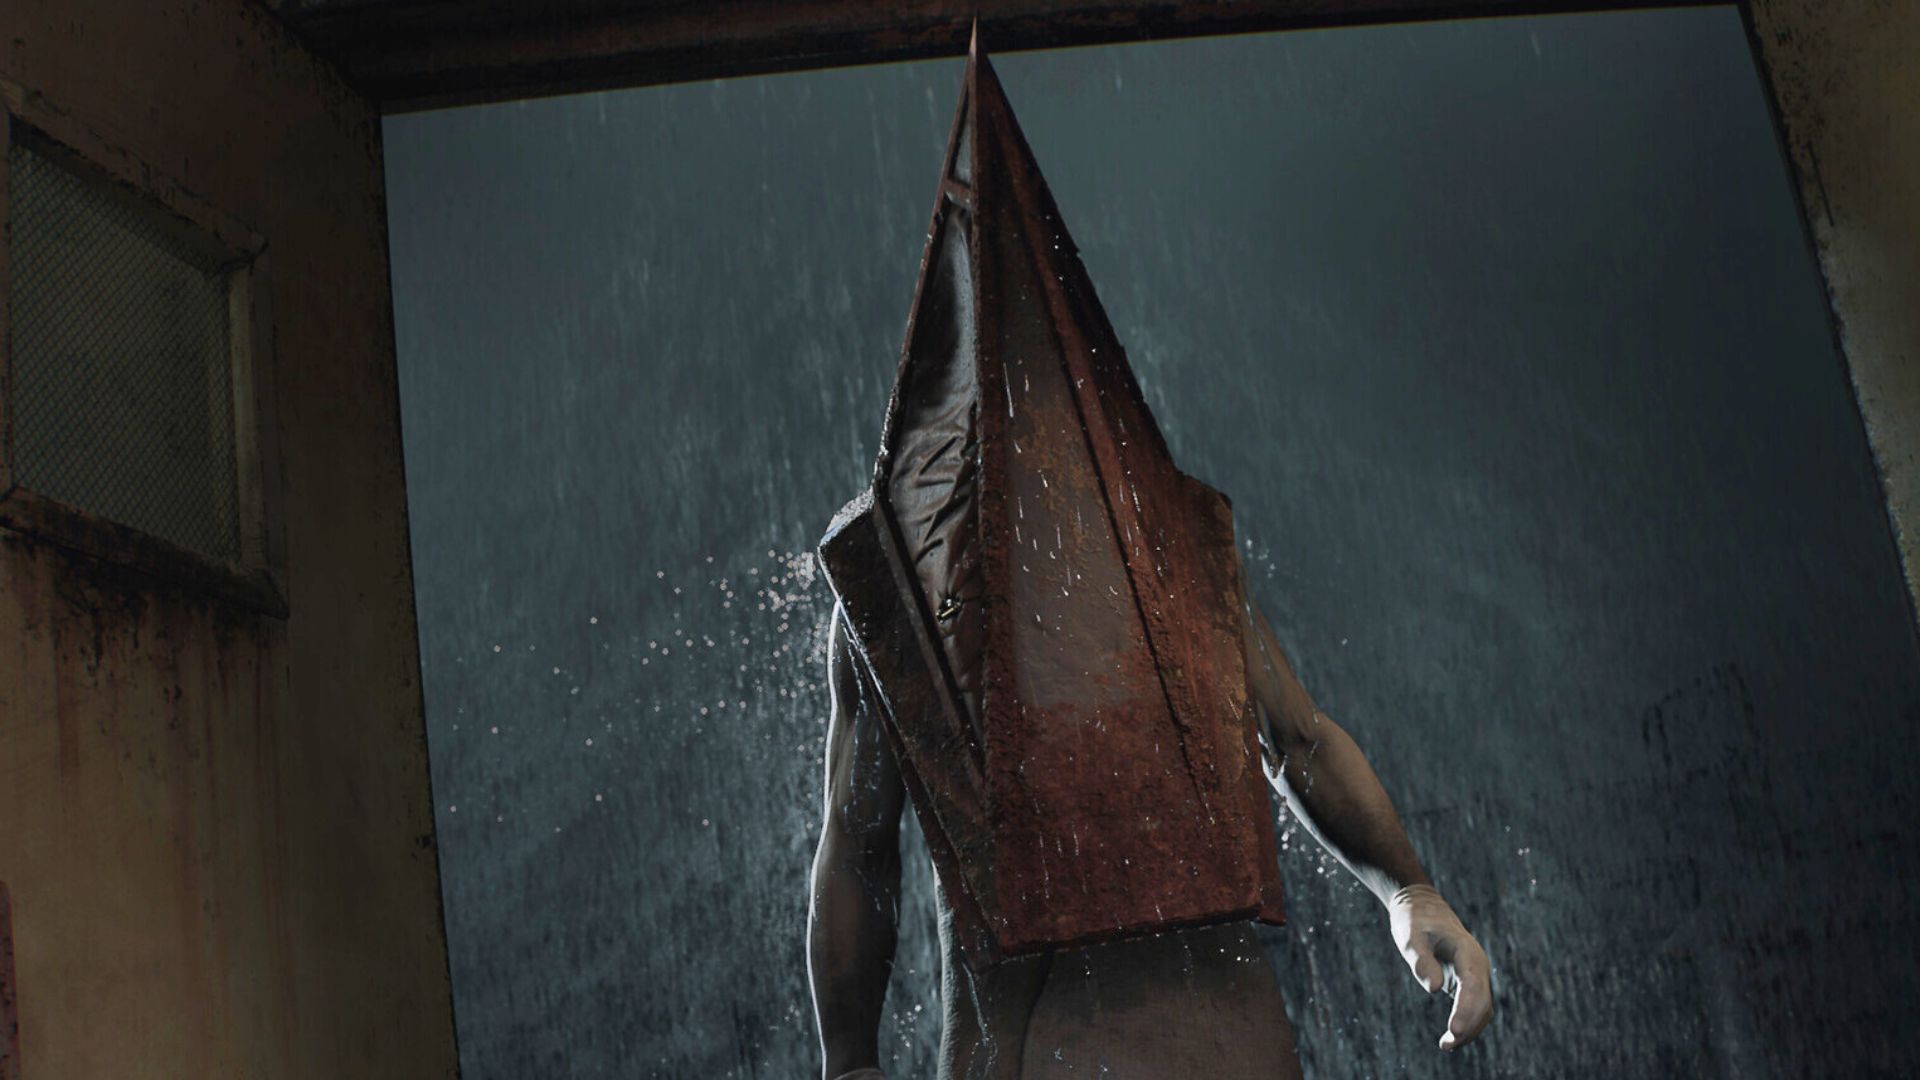 Pyramid Head - Silent Hill, Dead By Daylight